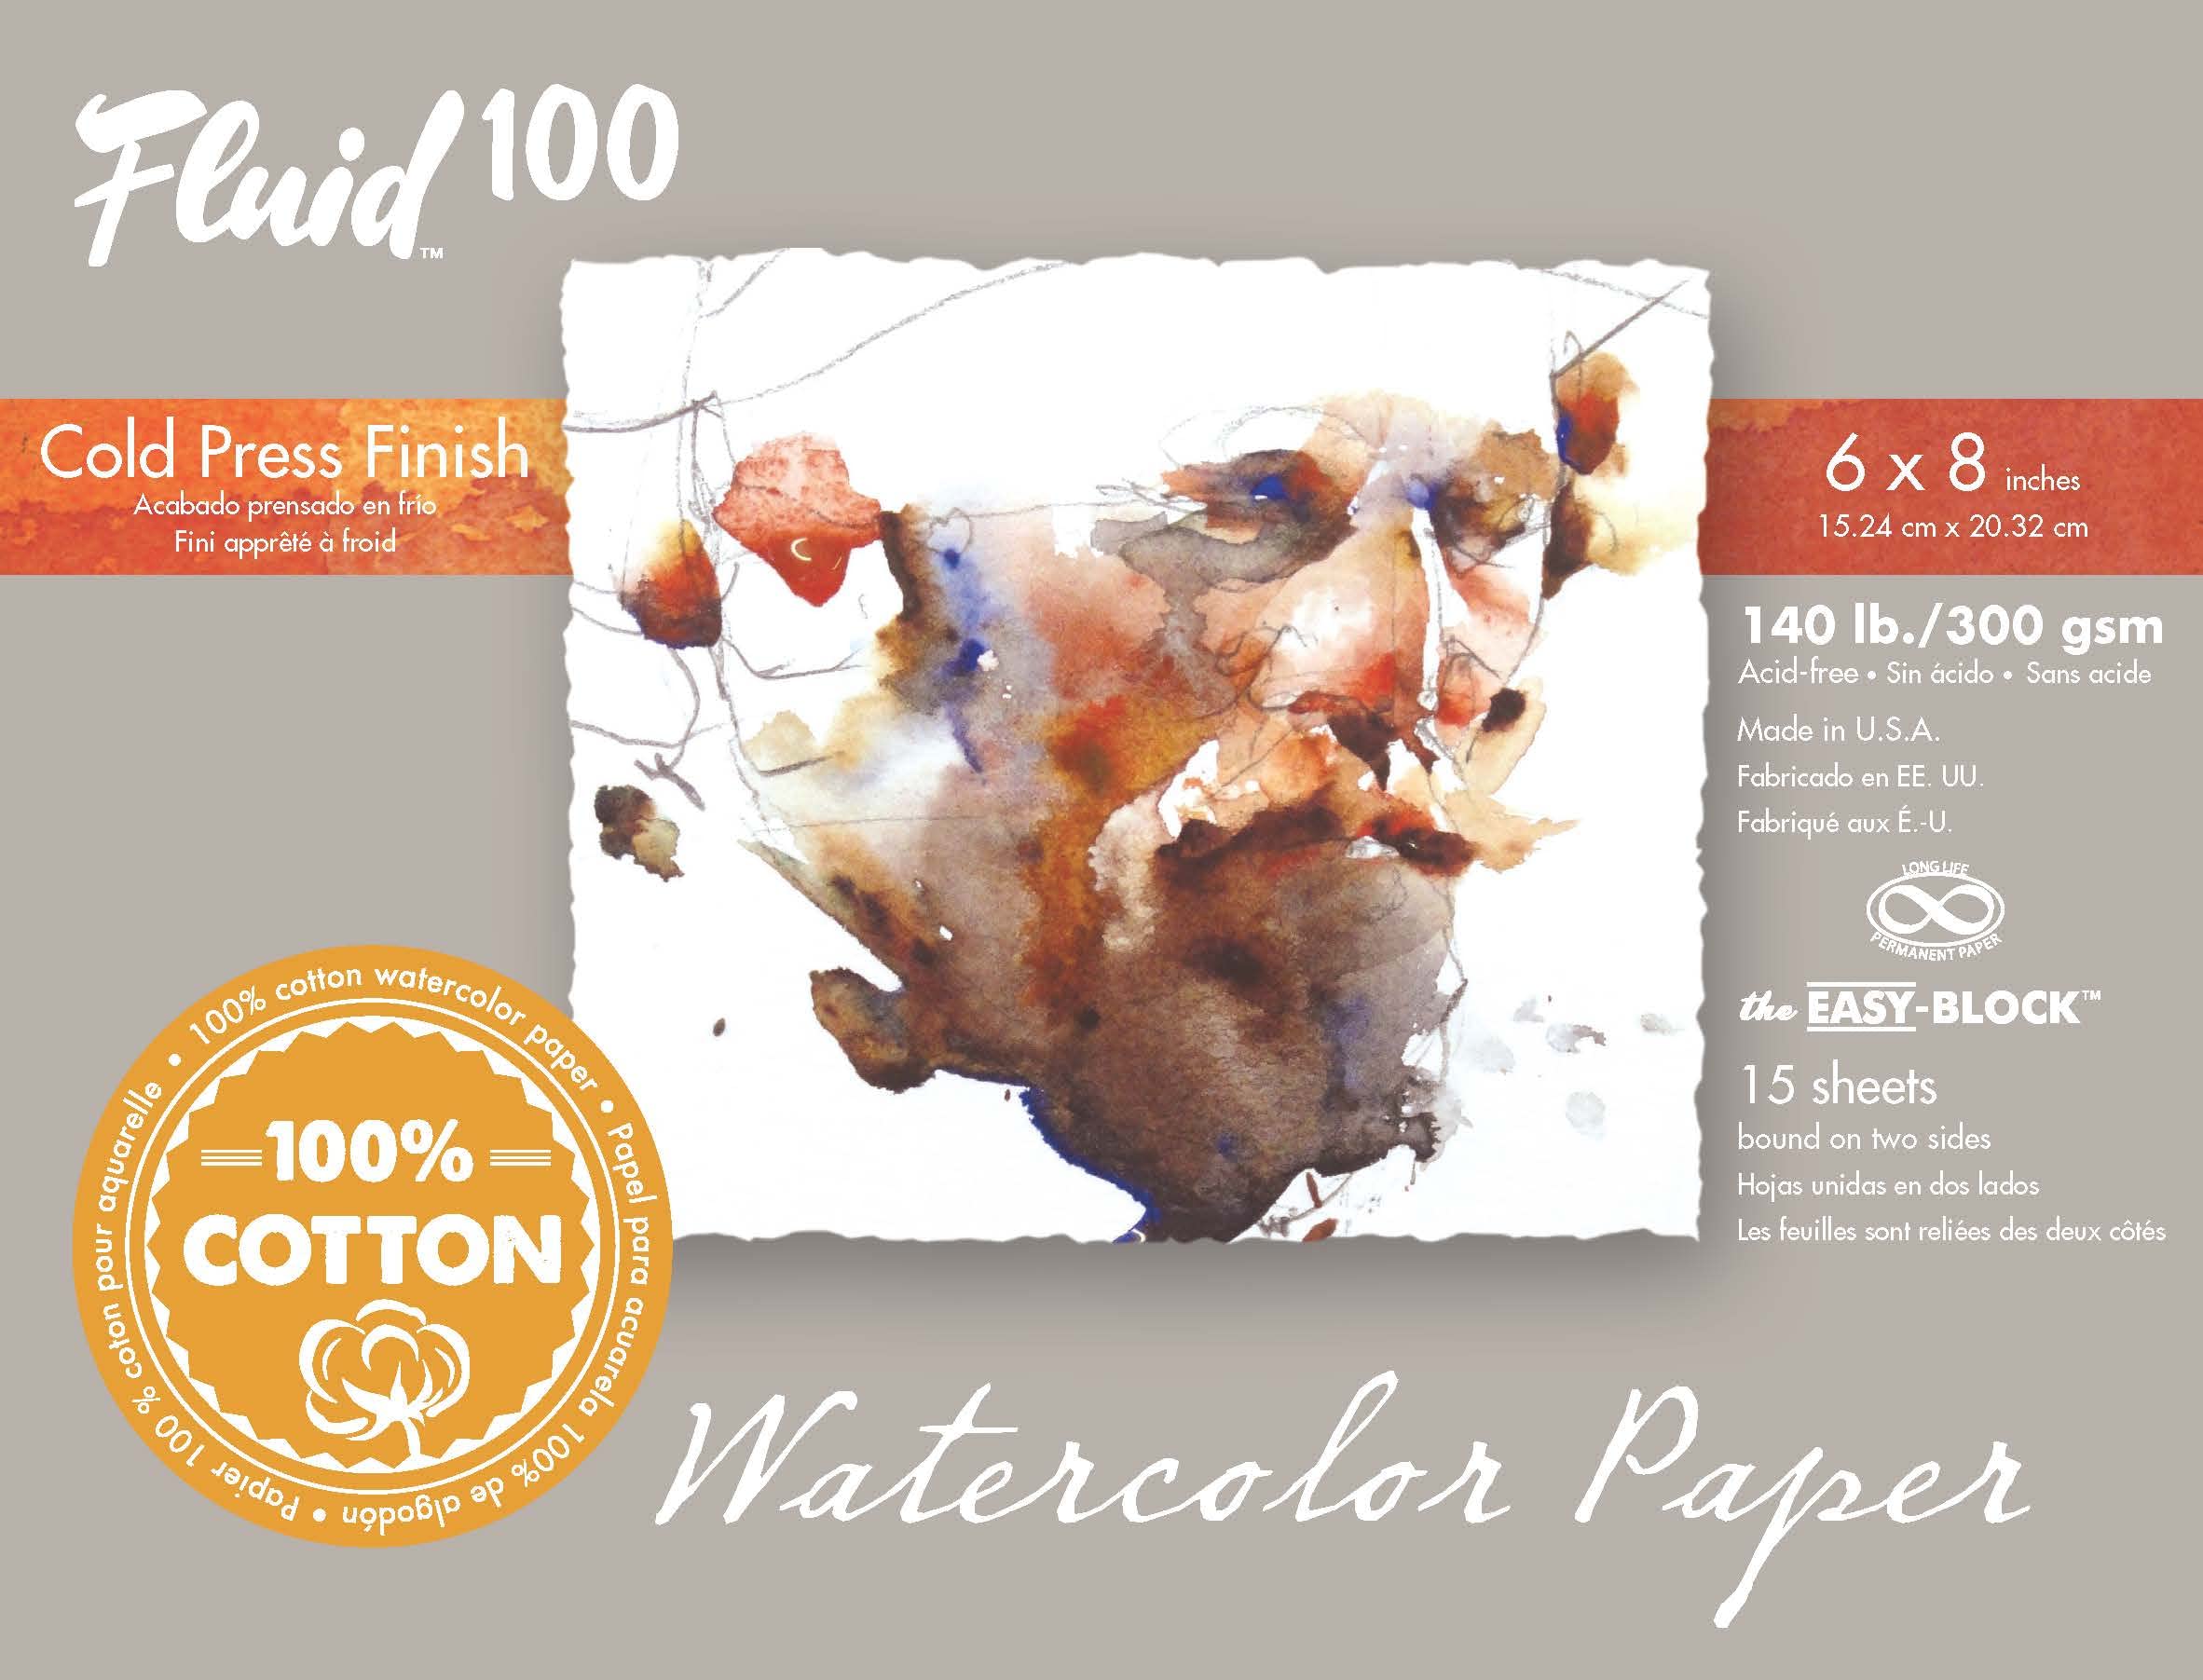 Fluid Hot Press Watercolor Paper Block 4 in. x 6 in. 15 Sheets